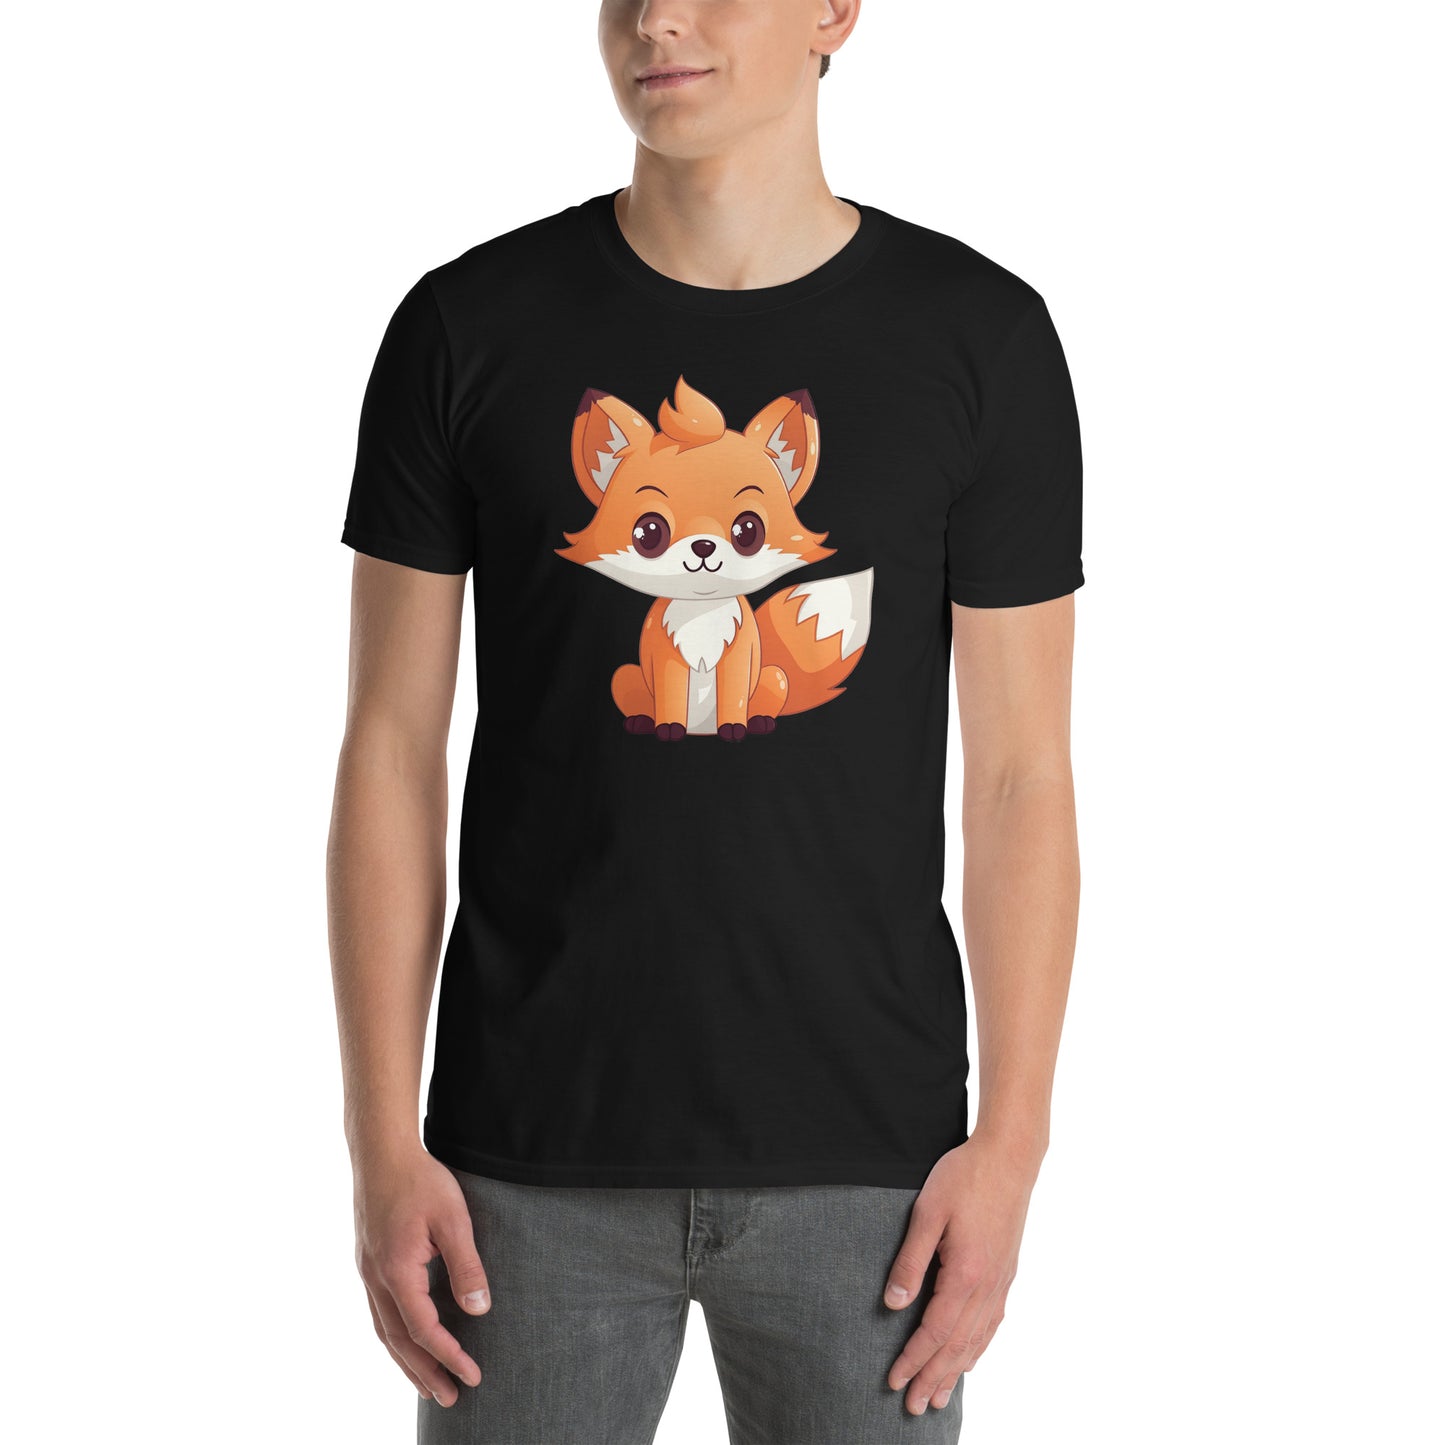 Short-Sleeve T-Shirt - Cute fox 2